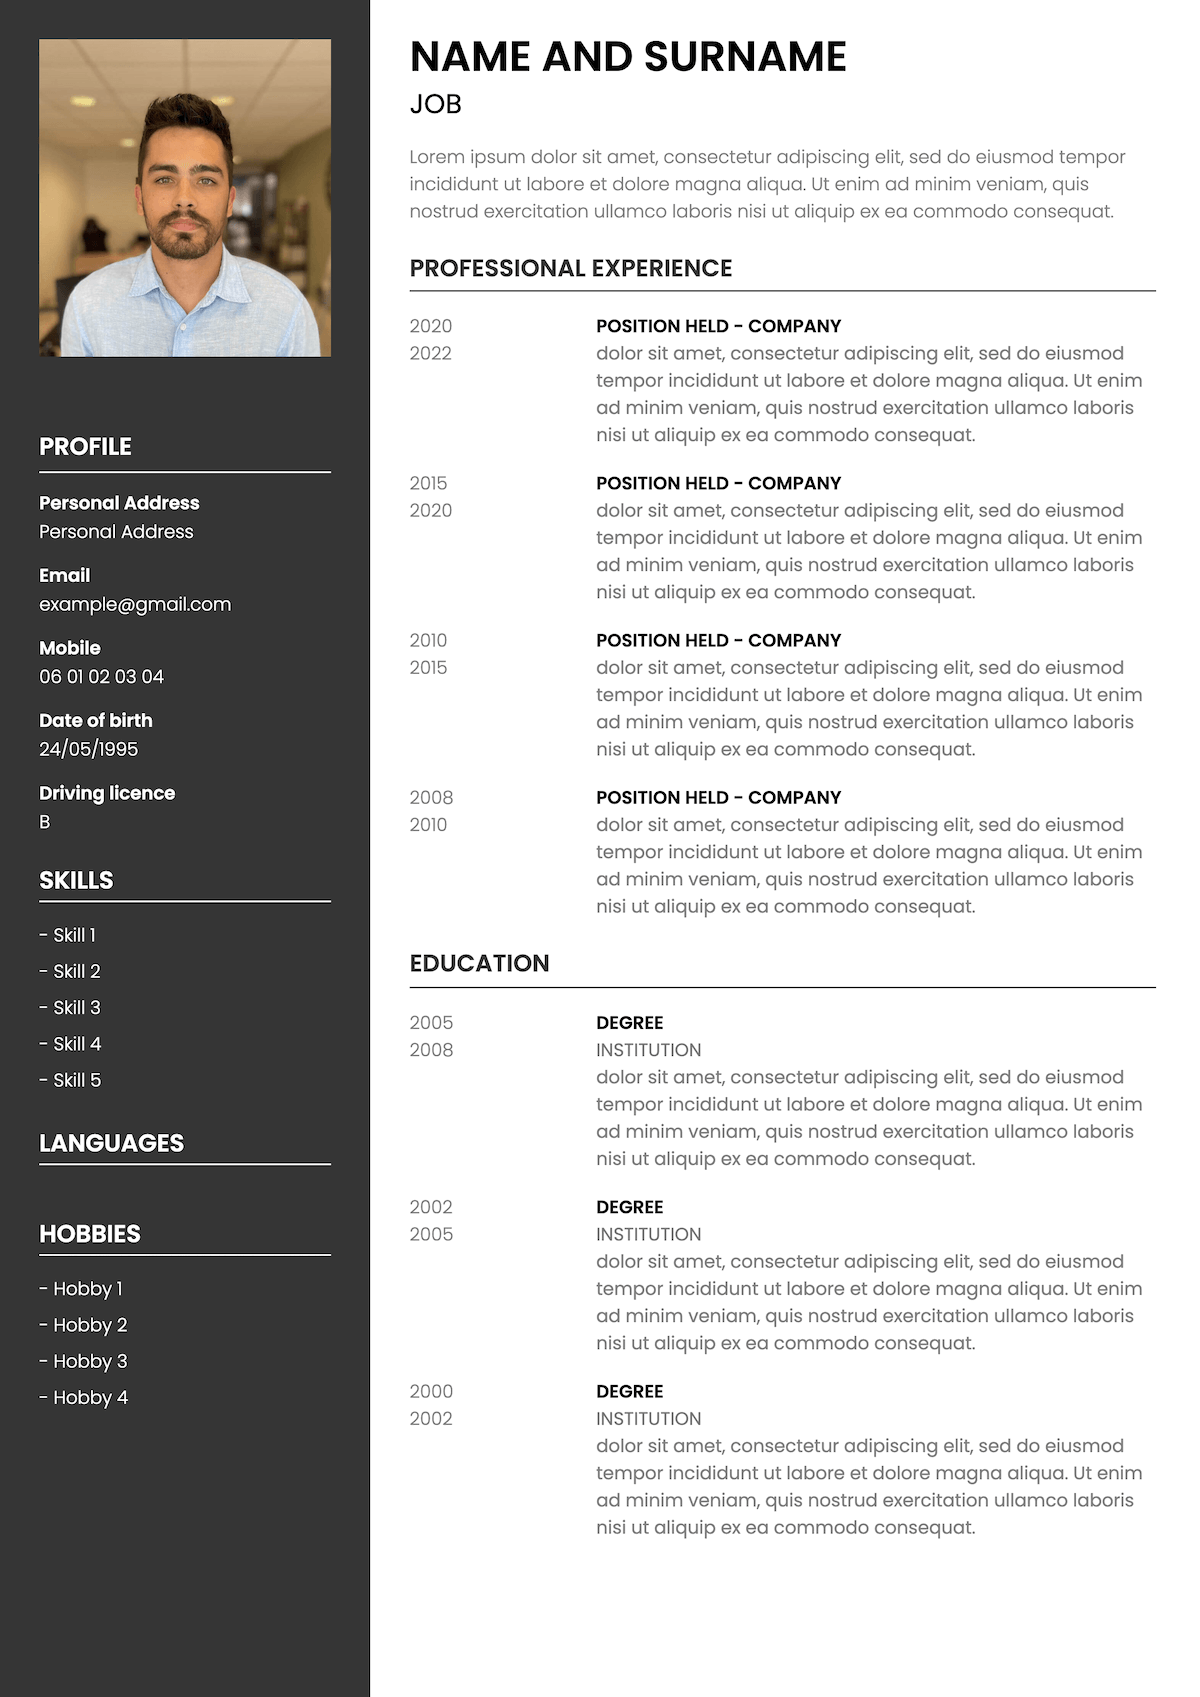 CV example career change